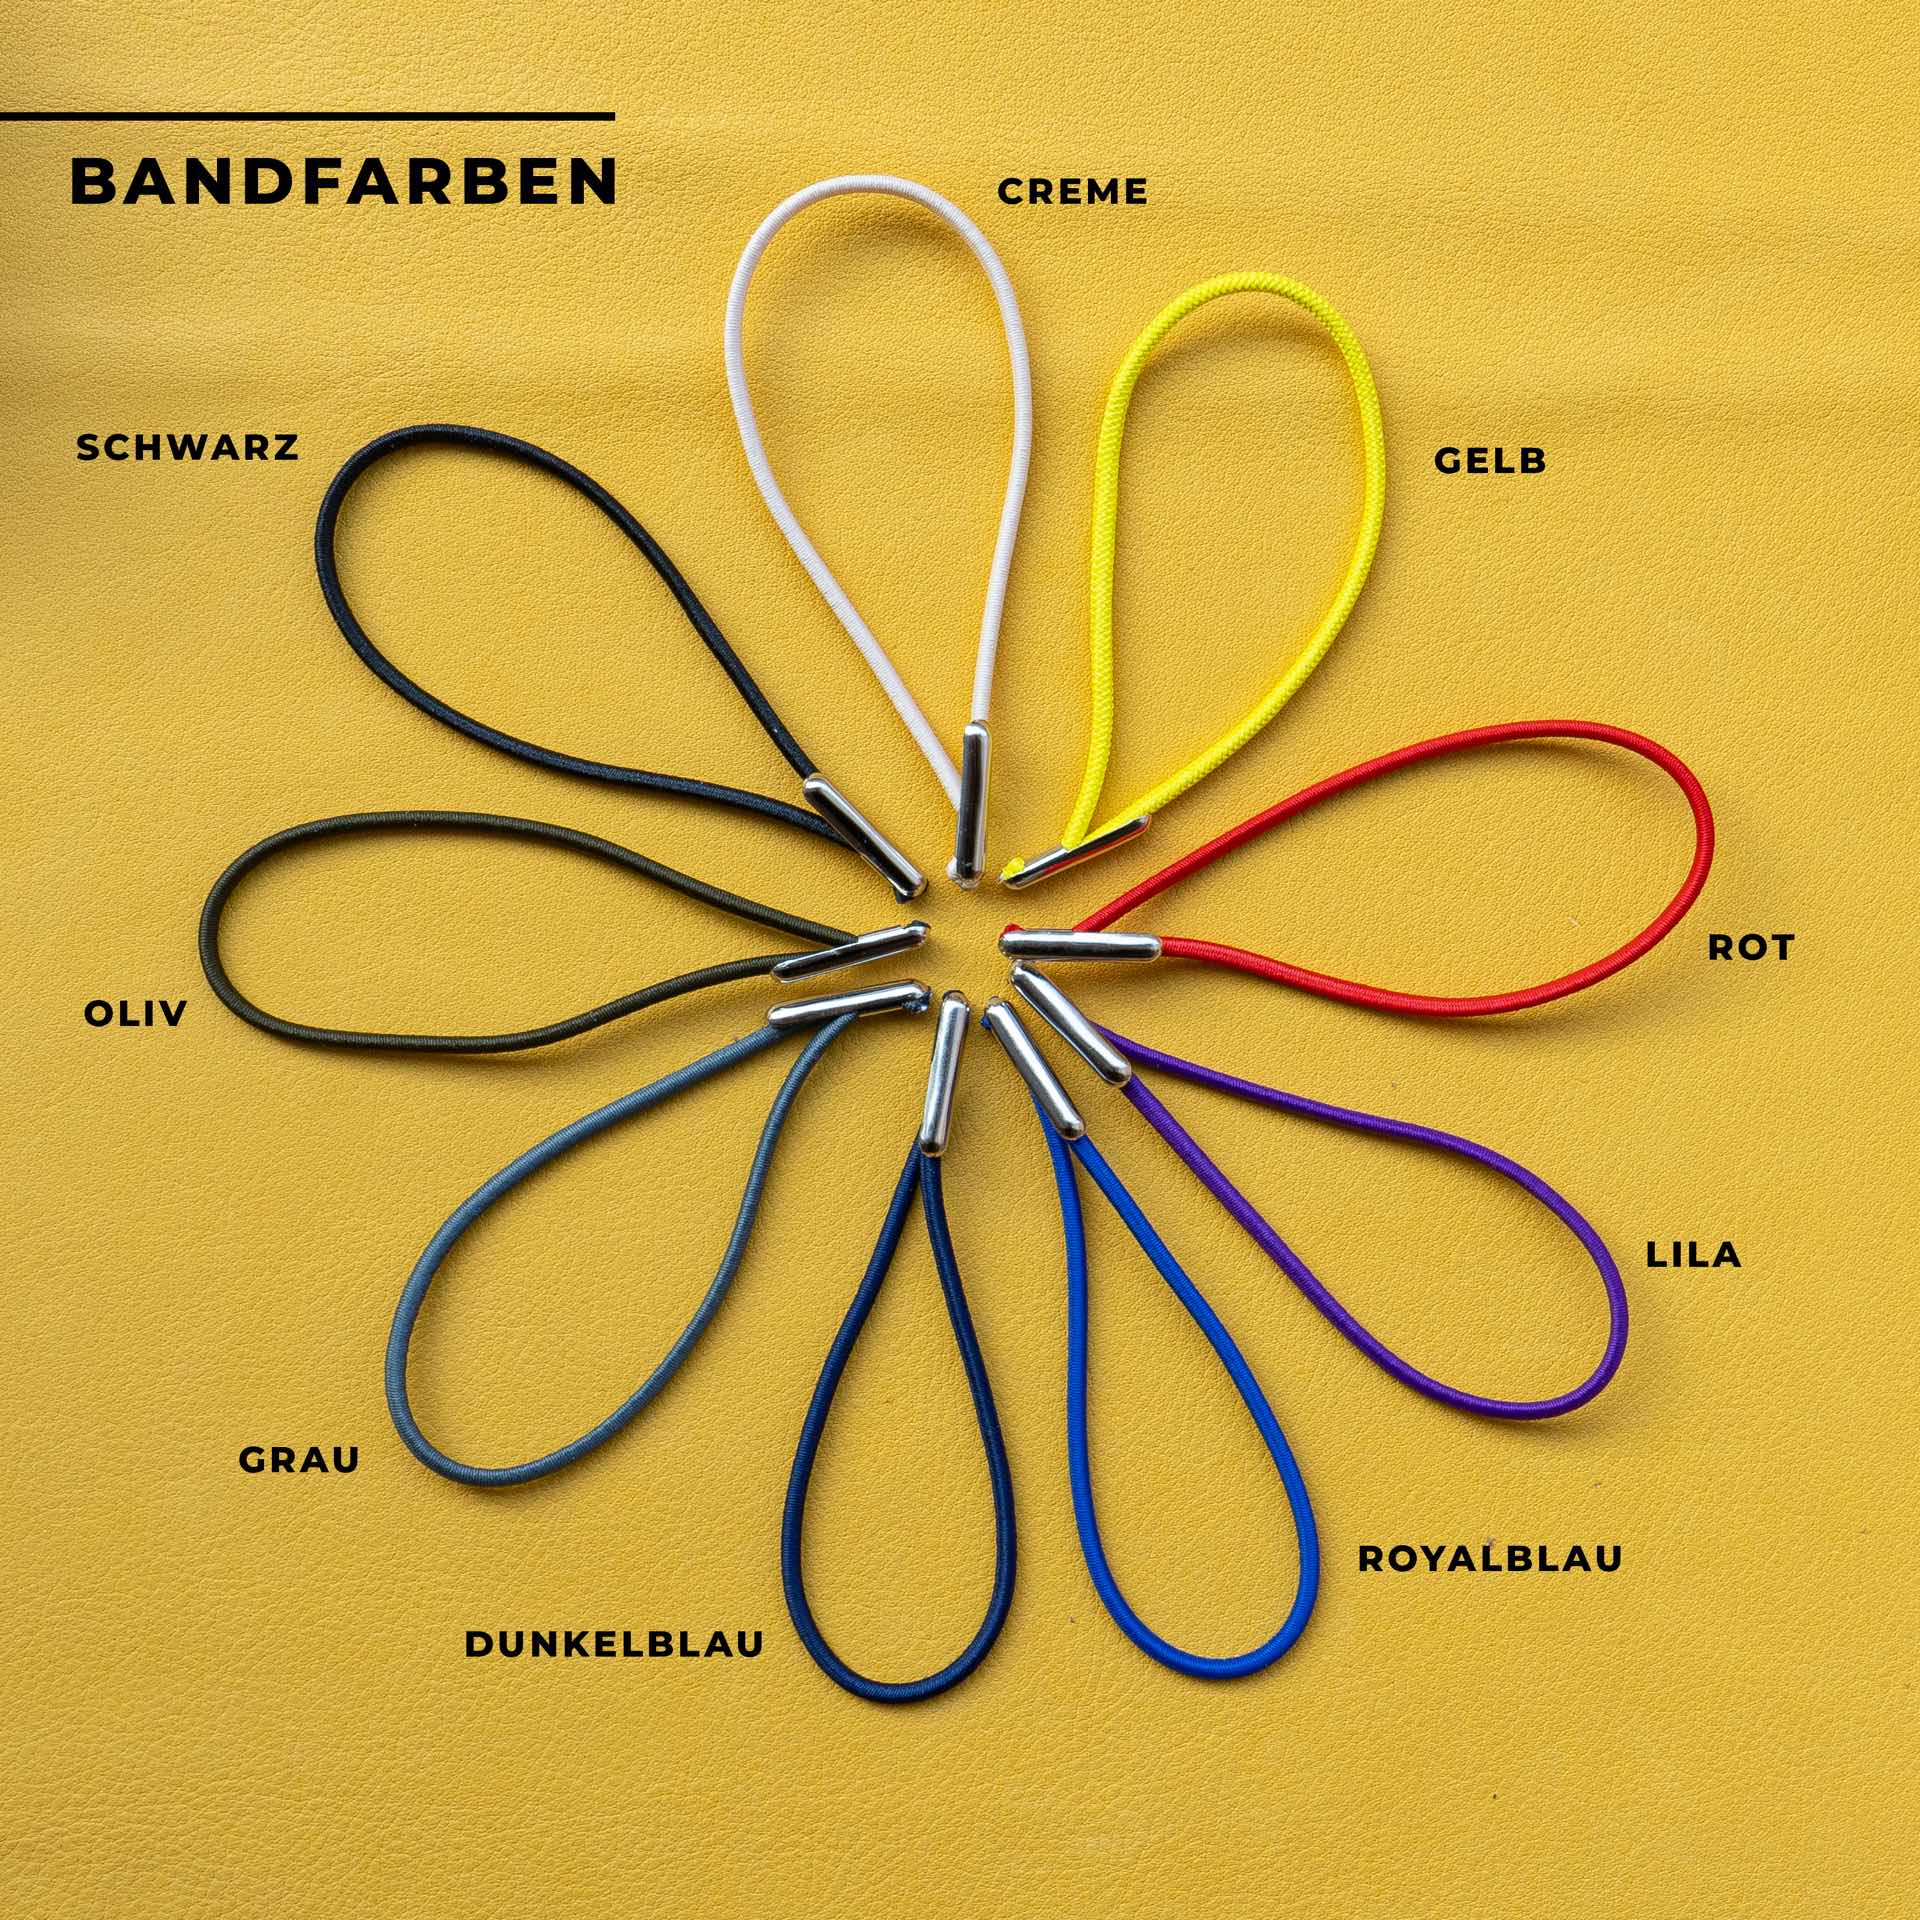 Bandfarben-Franziska-Klee-curry-bandfarben